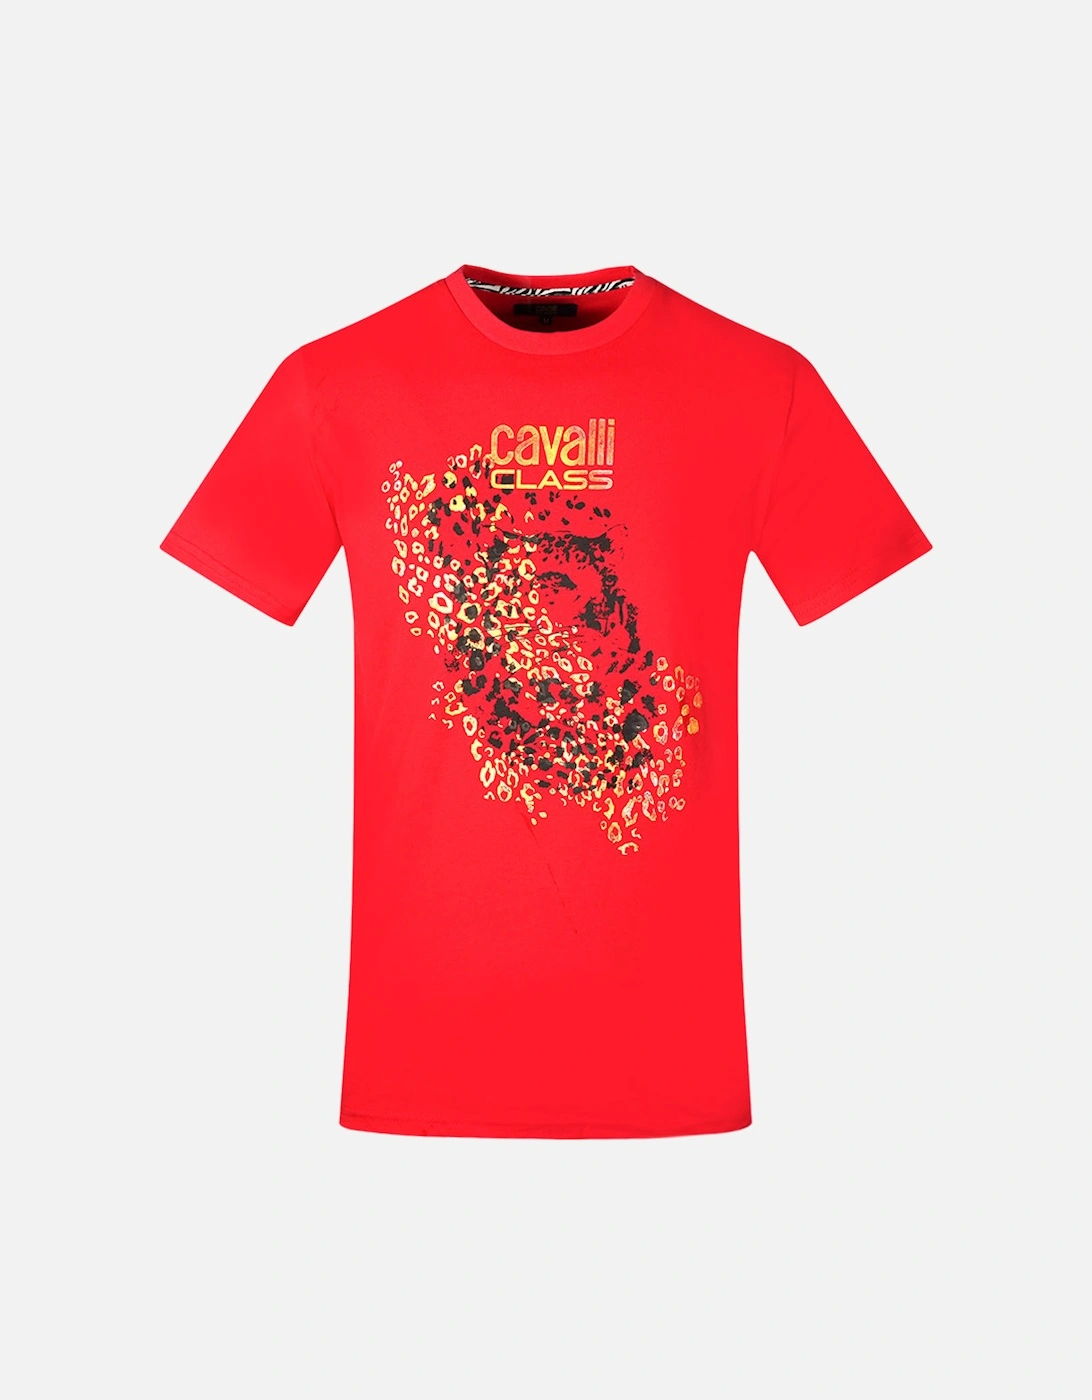 Cavalli Class Leopard Print Silhouette Red T-Shirt, 3 of 2